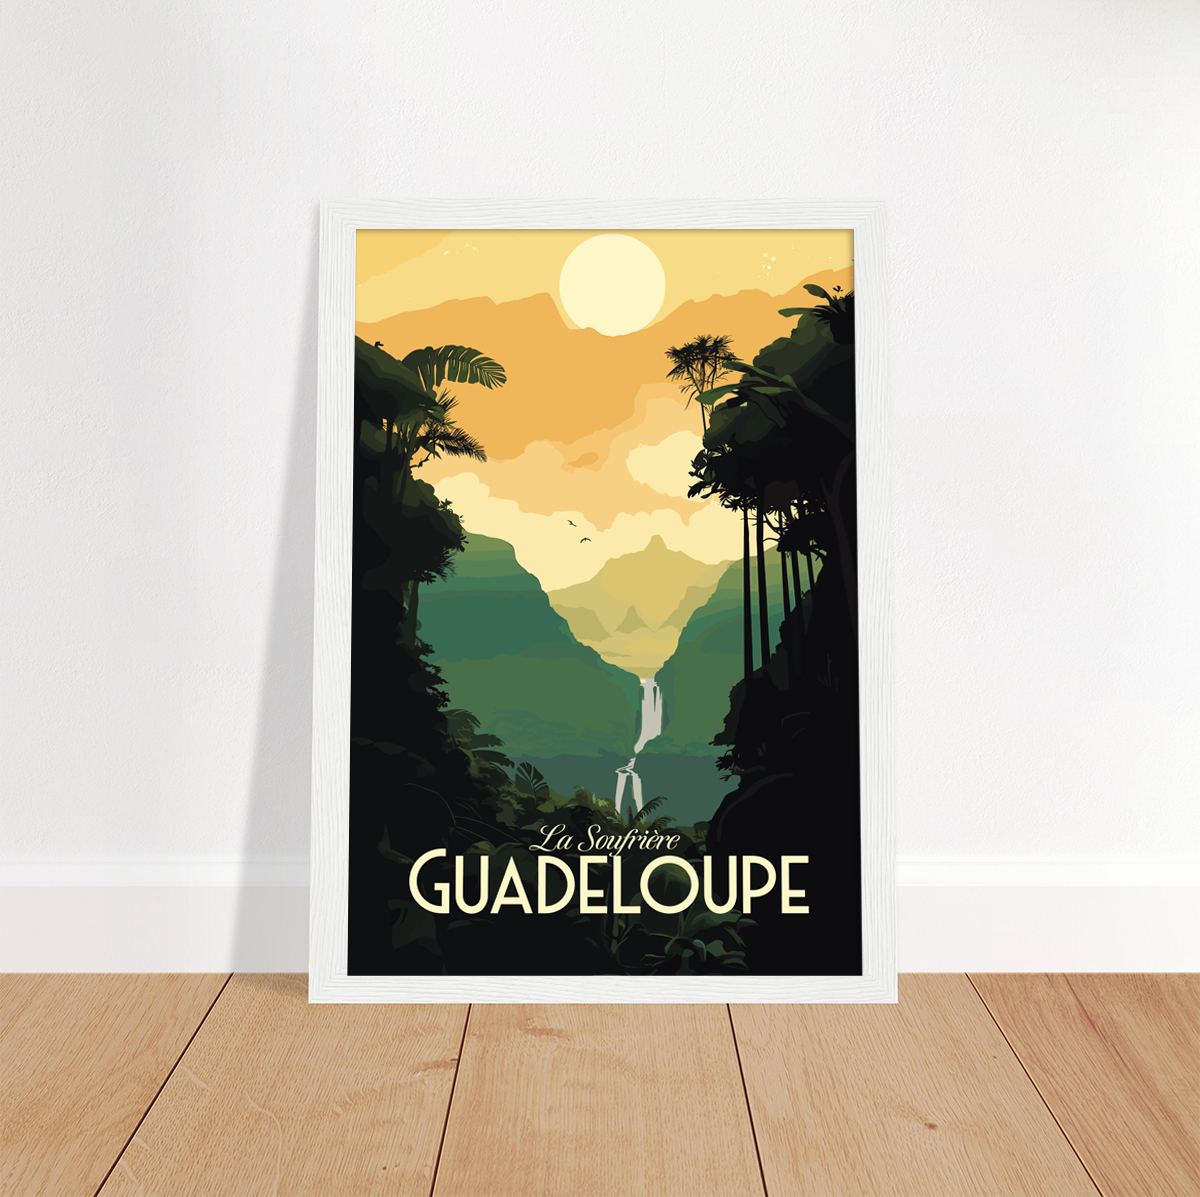 Guadeloupe - La Soufriere poster by bon voyage design